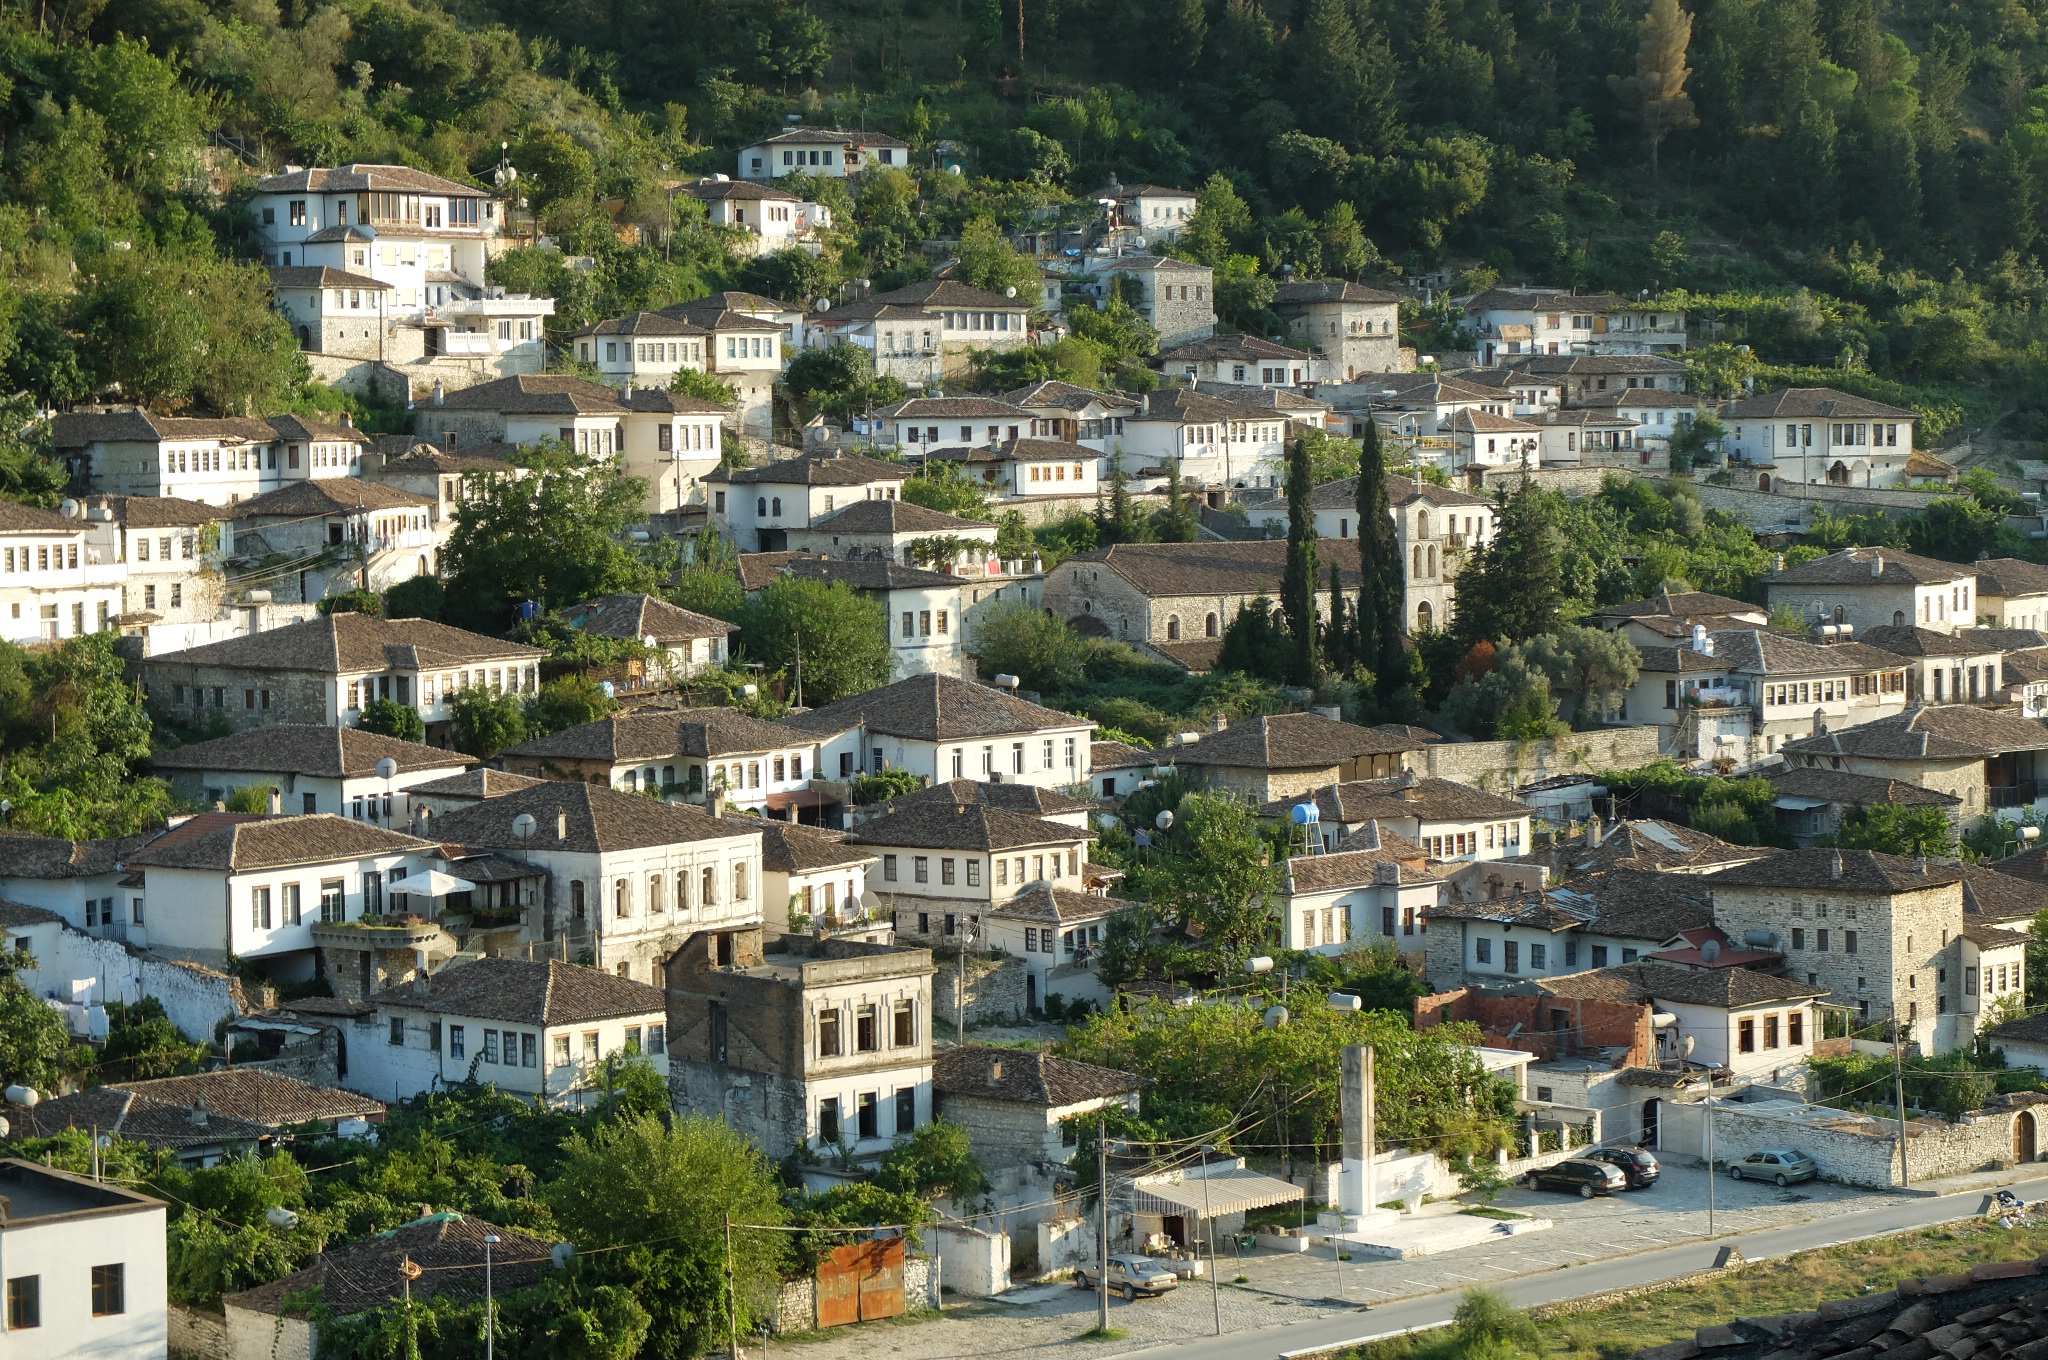 Berat Day Trip From Tirana